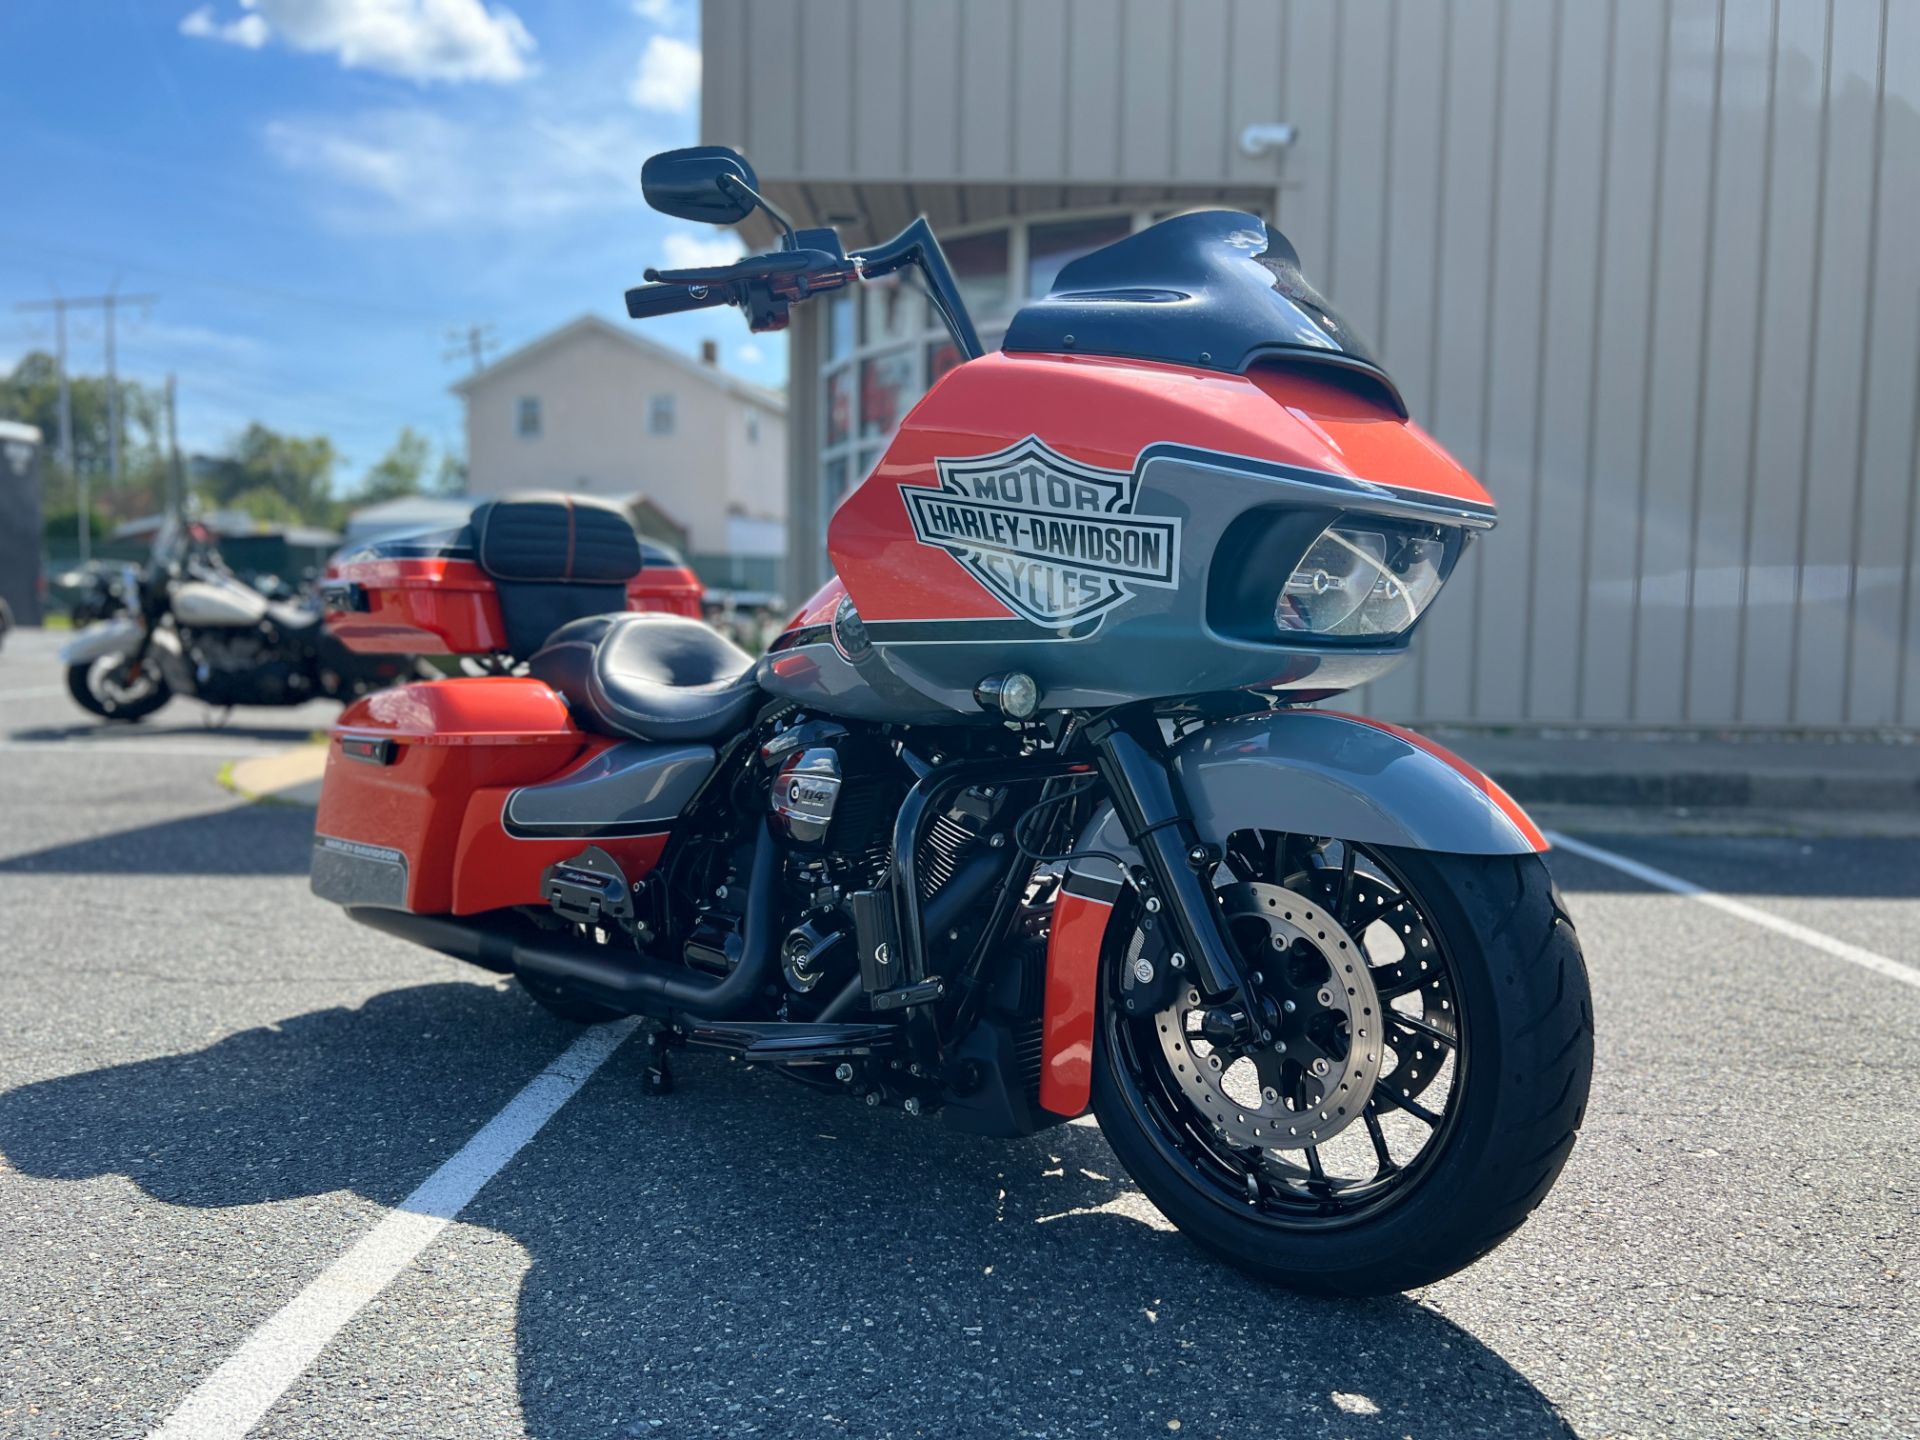 2019 Harley-Davidson Road Glide Custom in Dumfries, Virginia - Photo 5